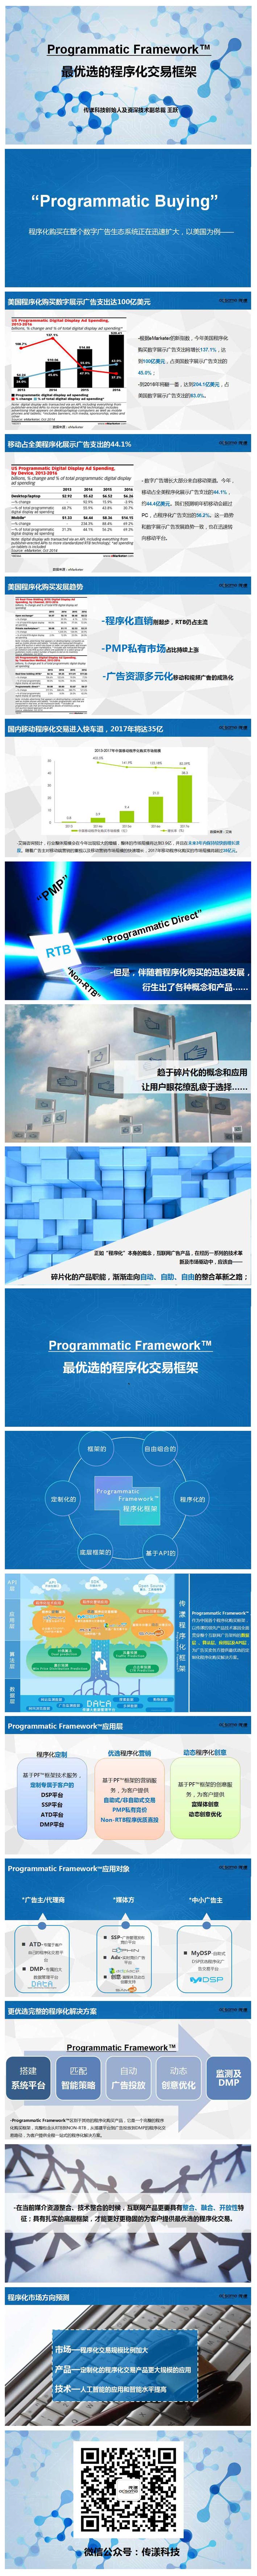 adsame_programmatic_framework